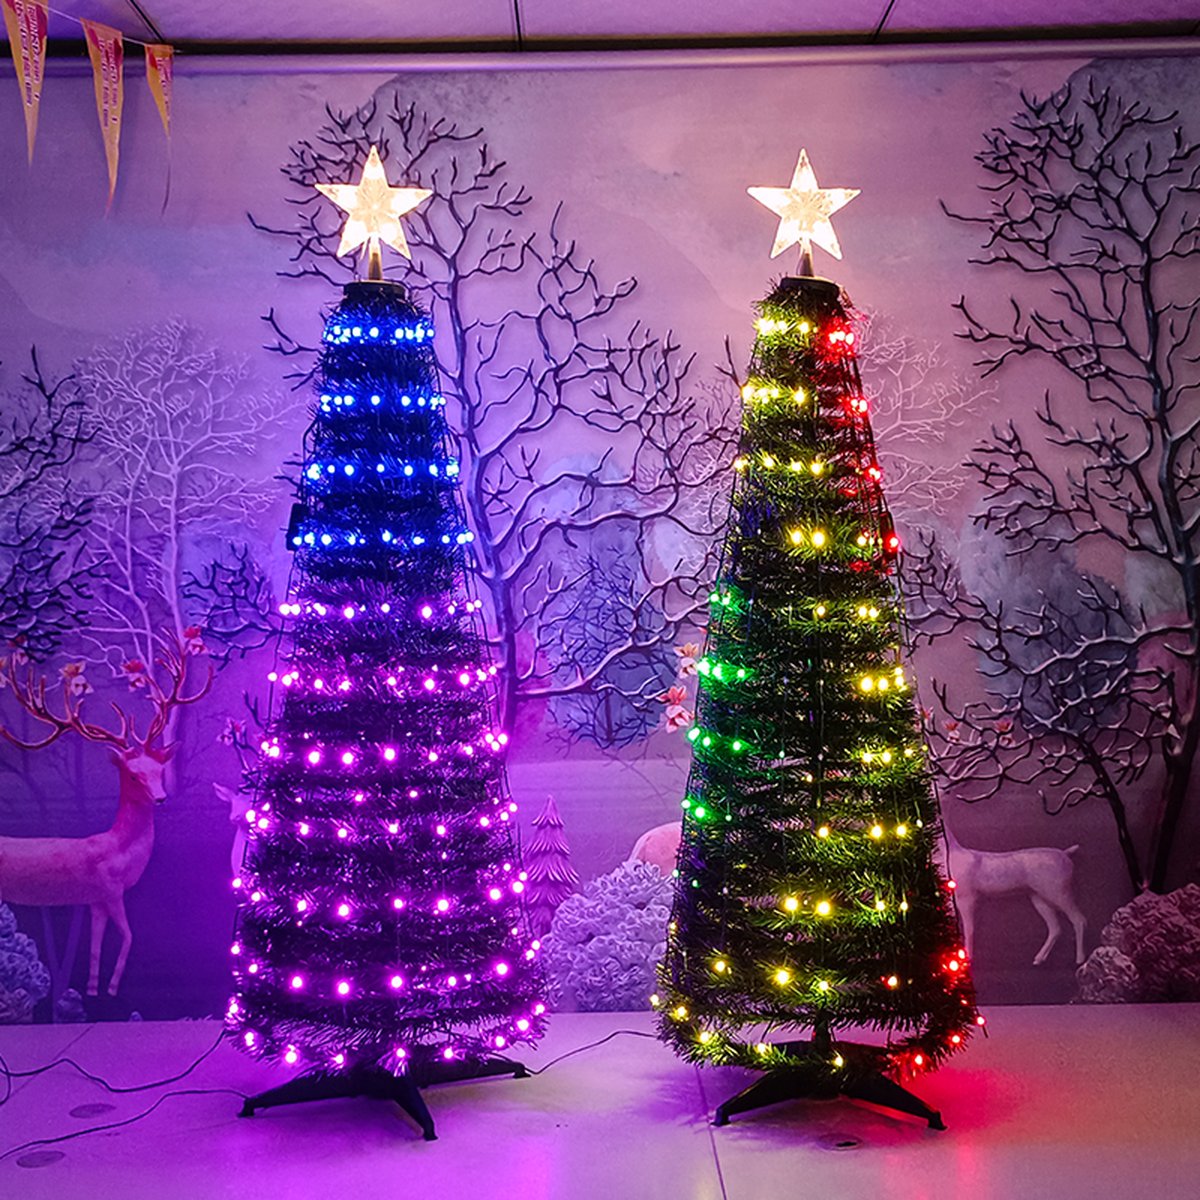 Kerstboom met slimme lampjes - 150 cms | inclusieve ster - kerstboom met led-verlichting | Kunstkerstboom/ Kerstboom - 150cm incl. kerstboomverlichting